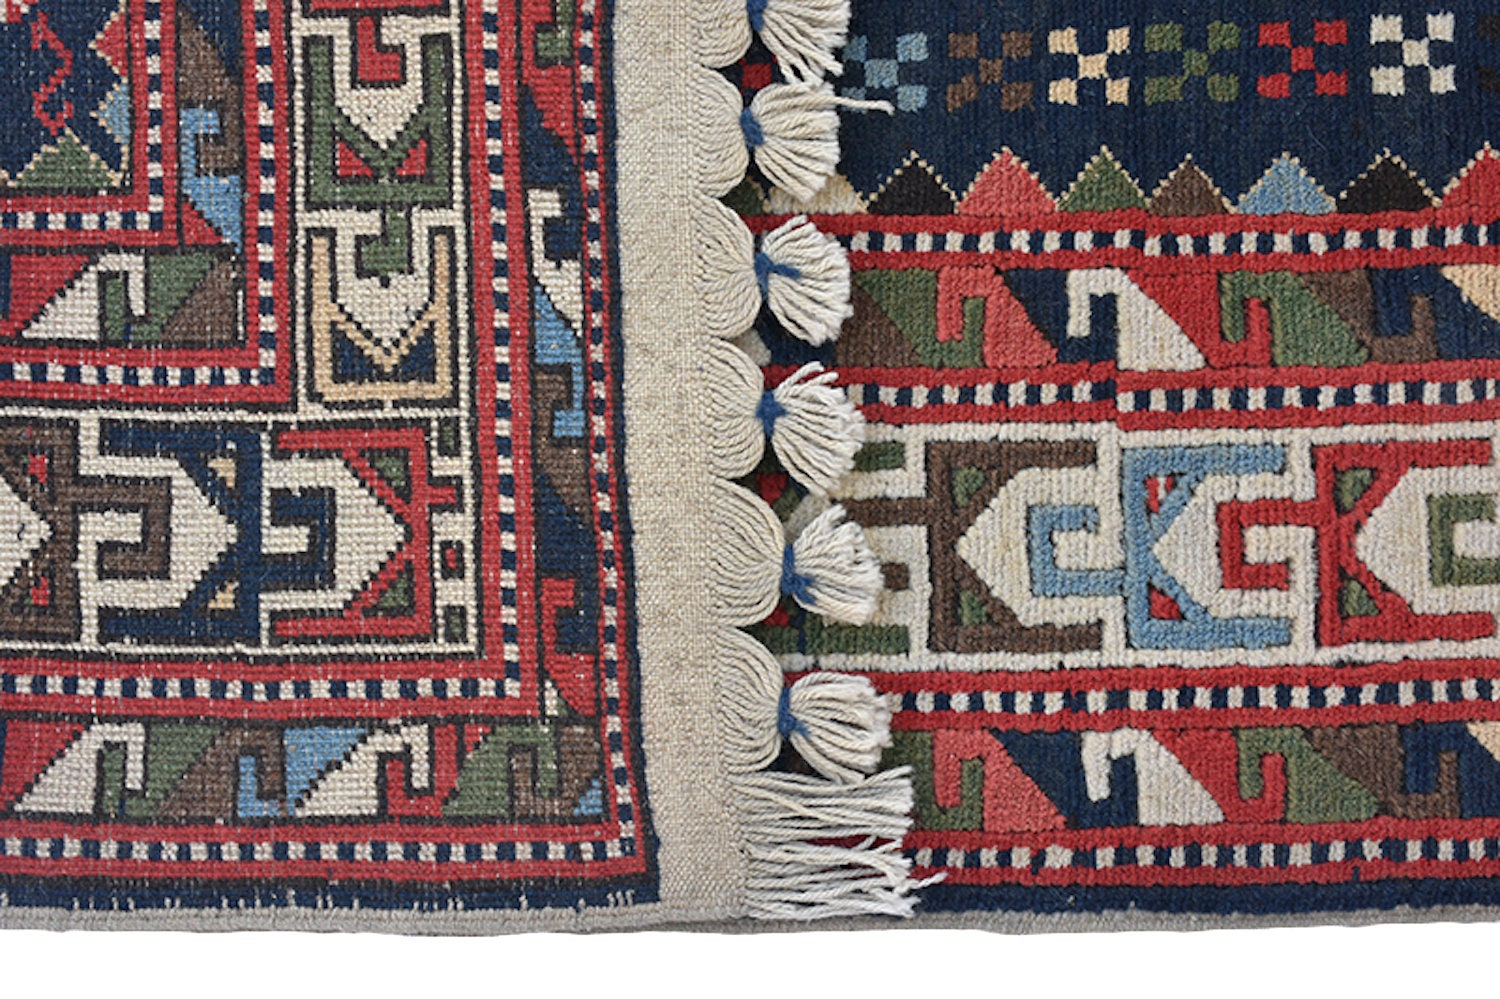 Vintage Kazak 4x6 Rug | Red Beige Geometric Rug | Tribal Boho Nomadic Rug | Accent Rug | Wool Antique Rug